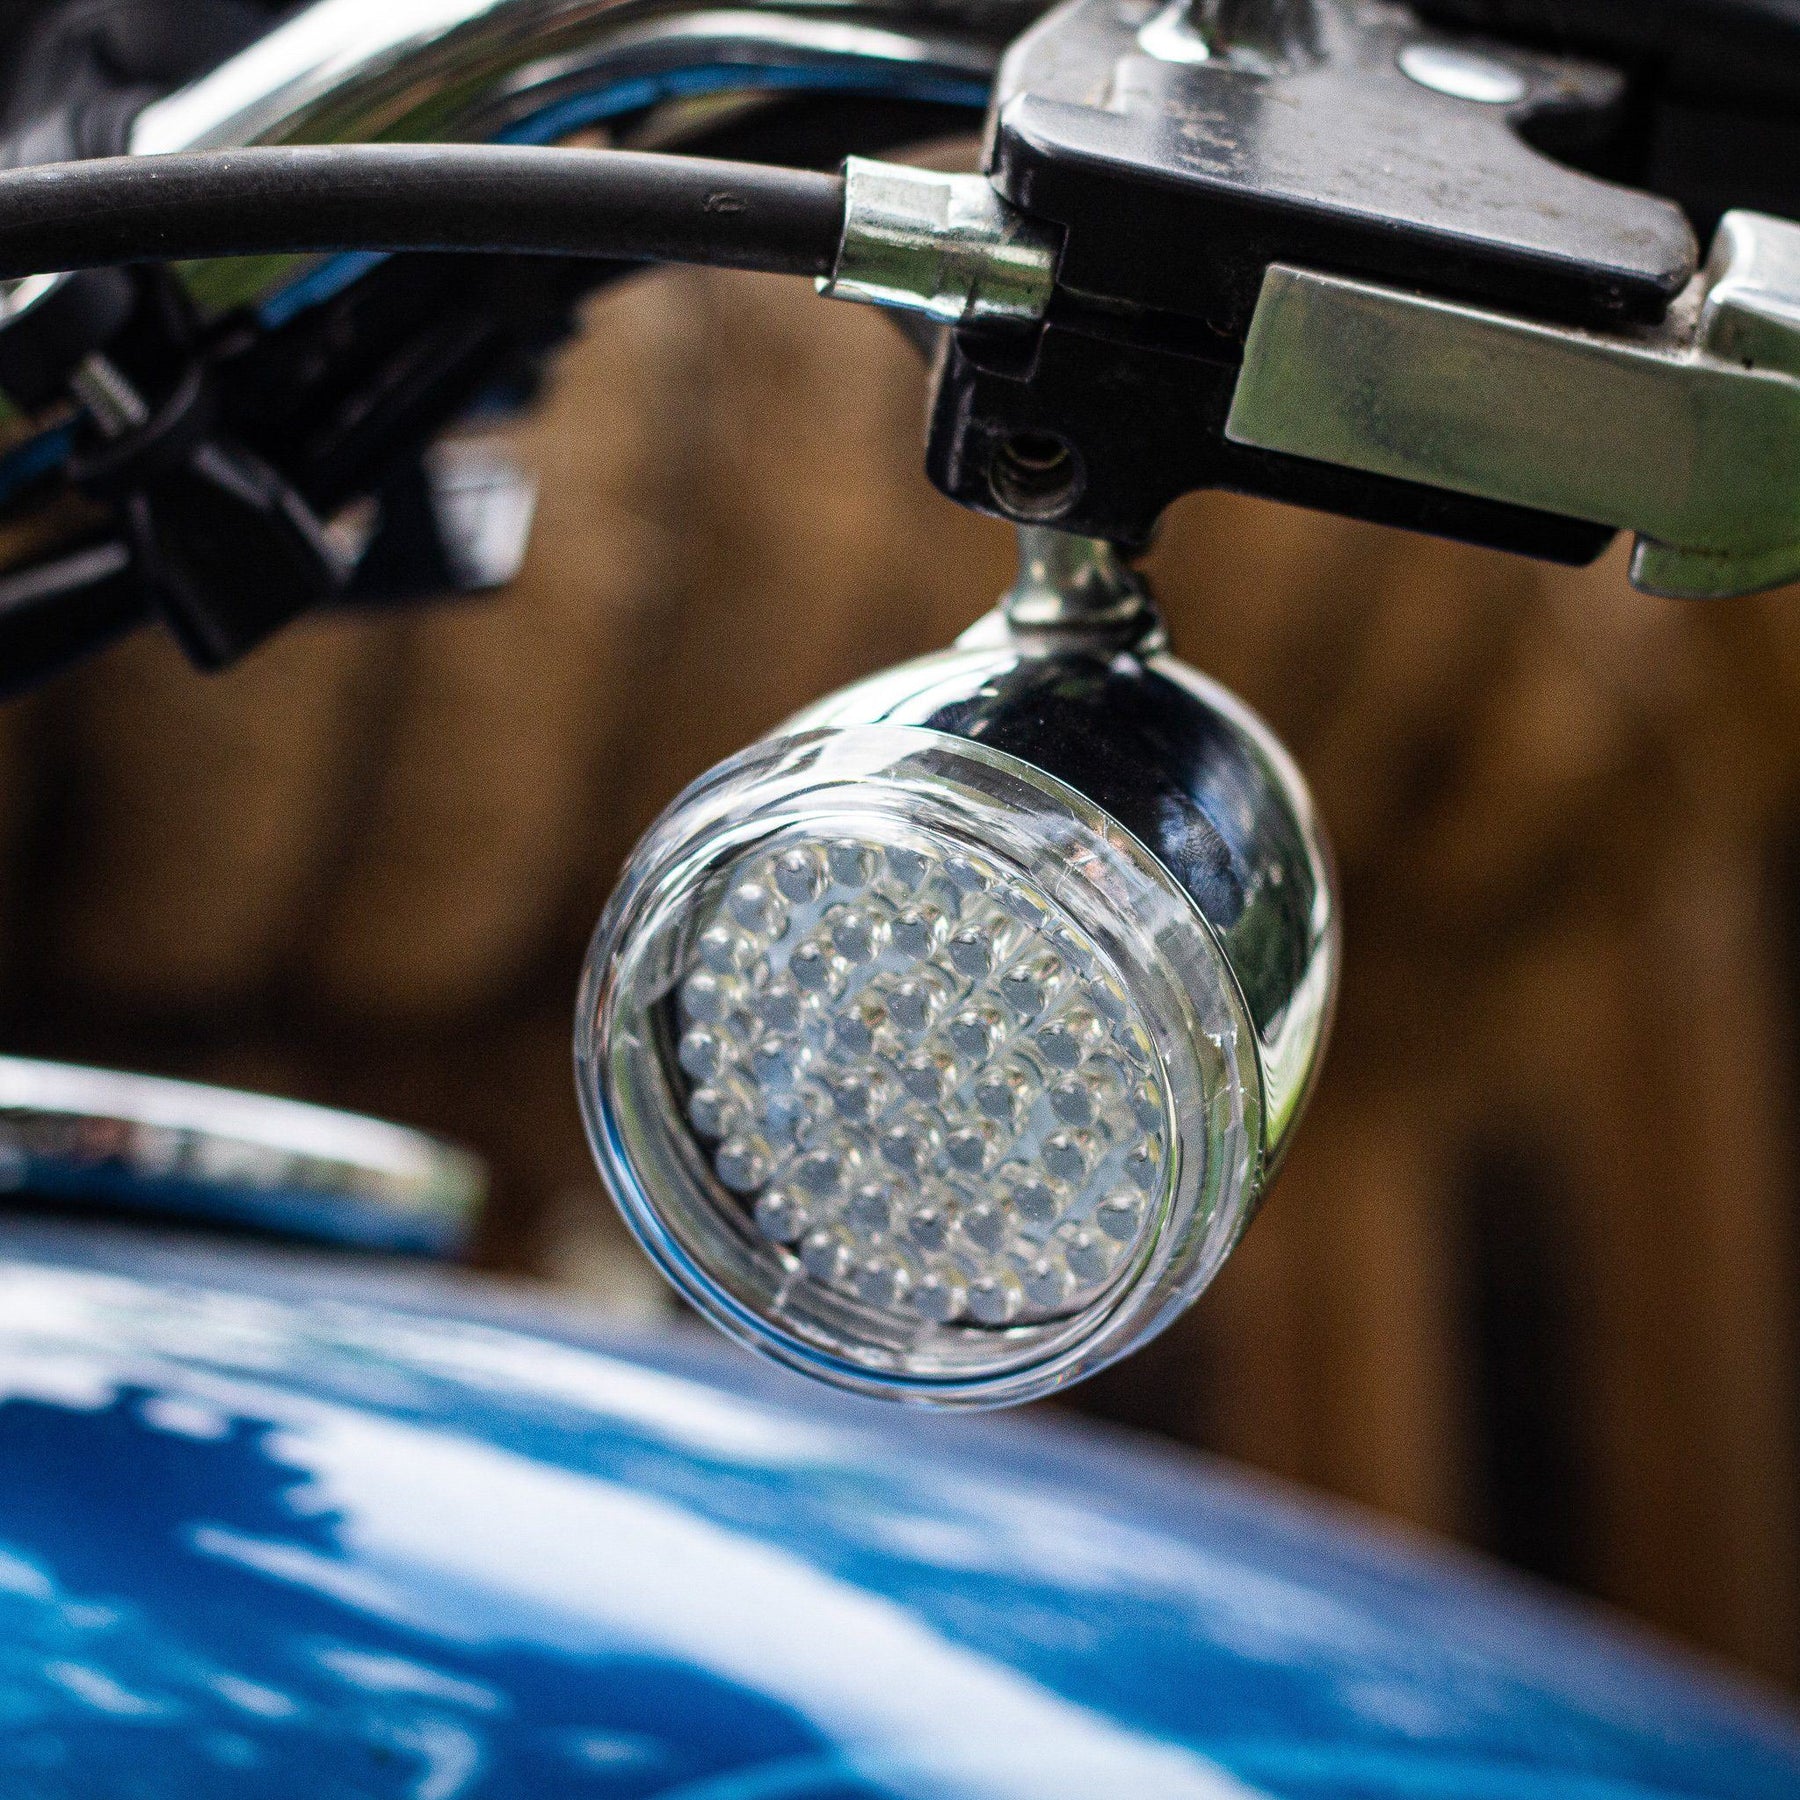 2” LED Turn Signal Kits - Eagle Lights 2” LED Turn Signal Kit For Harley Davidson - (Bikes W/o Rear Center Tail Light) -(2) Front Turn Signals, (2) Rear Turn Signals